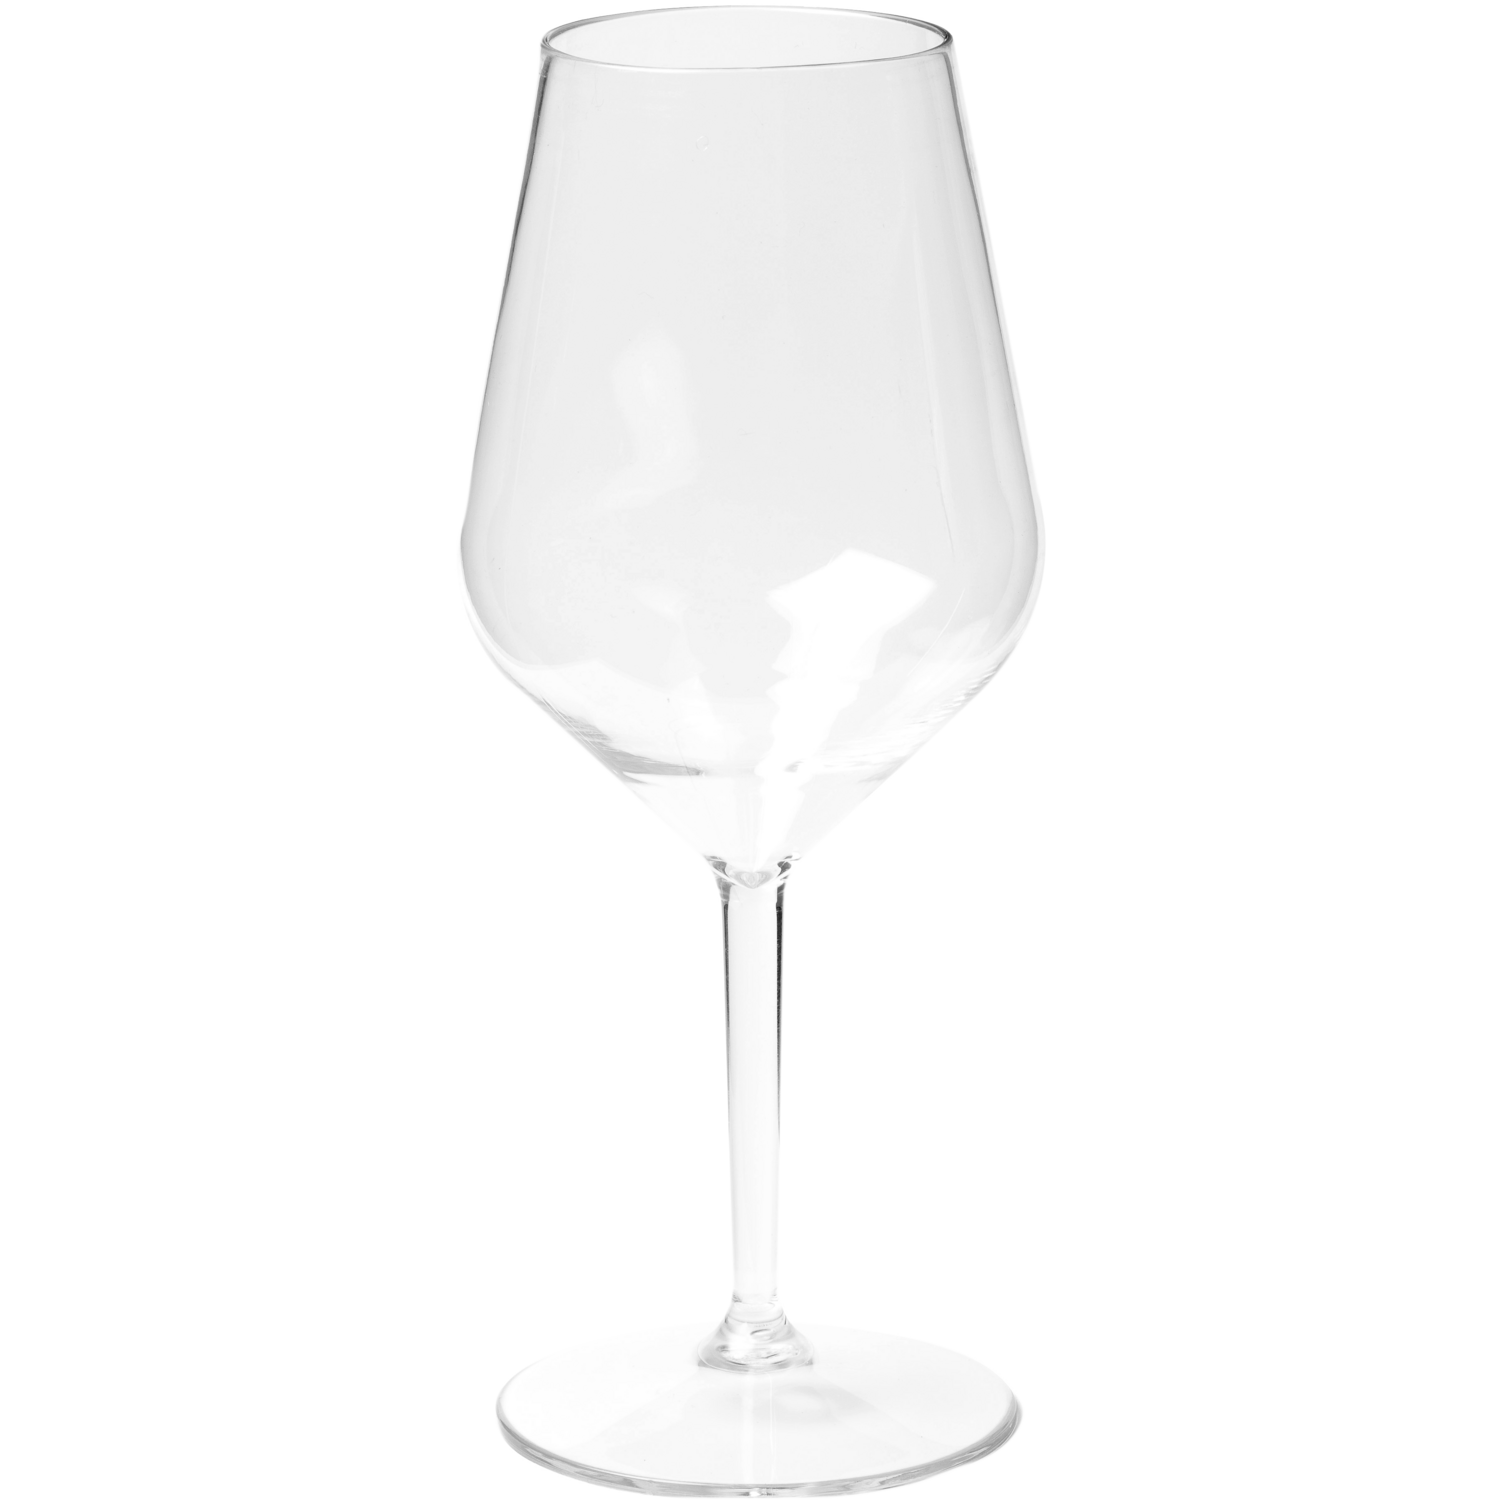 Depa® Glas, wijnglas, reusable, pETG, 470ml, transparant 1